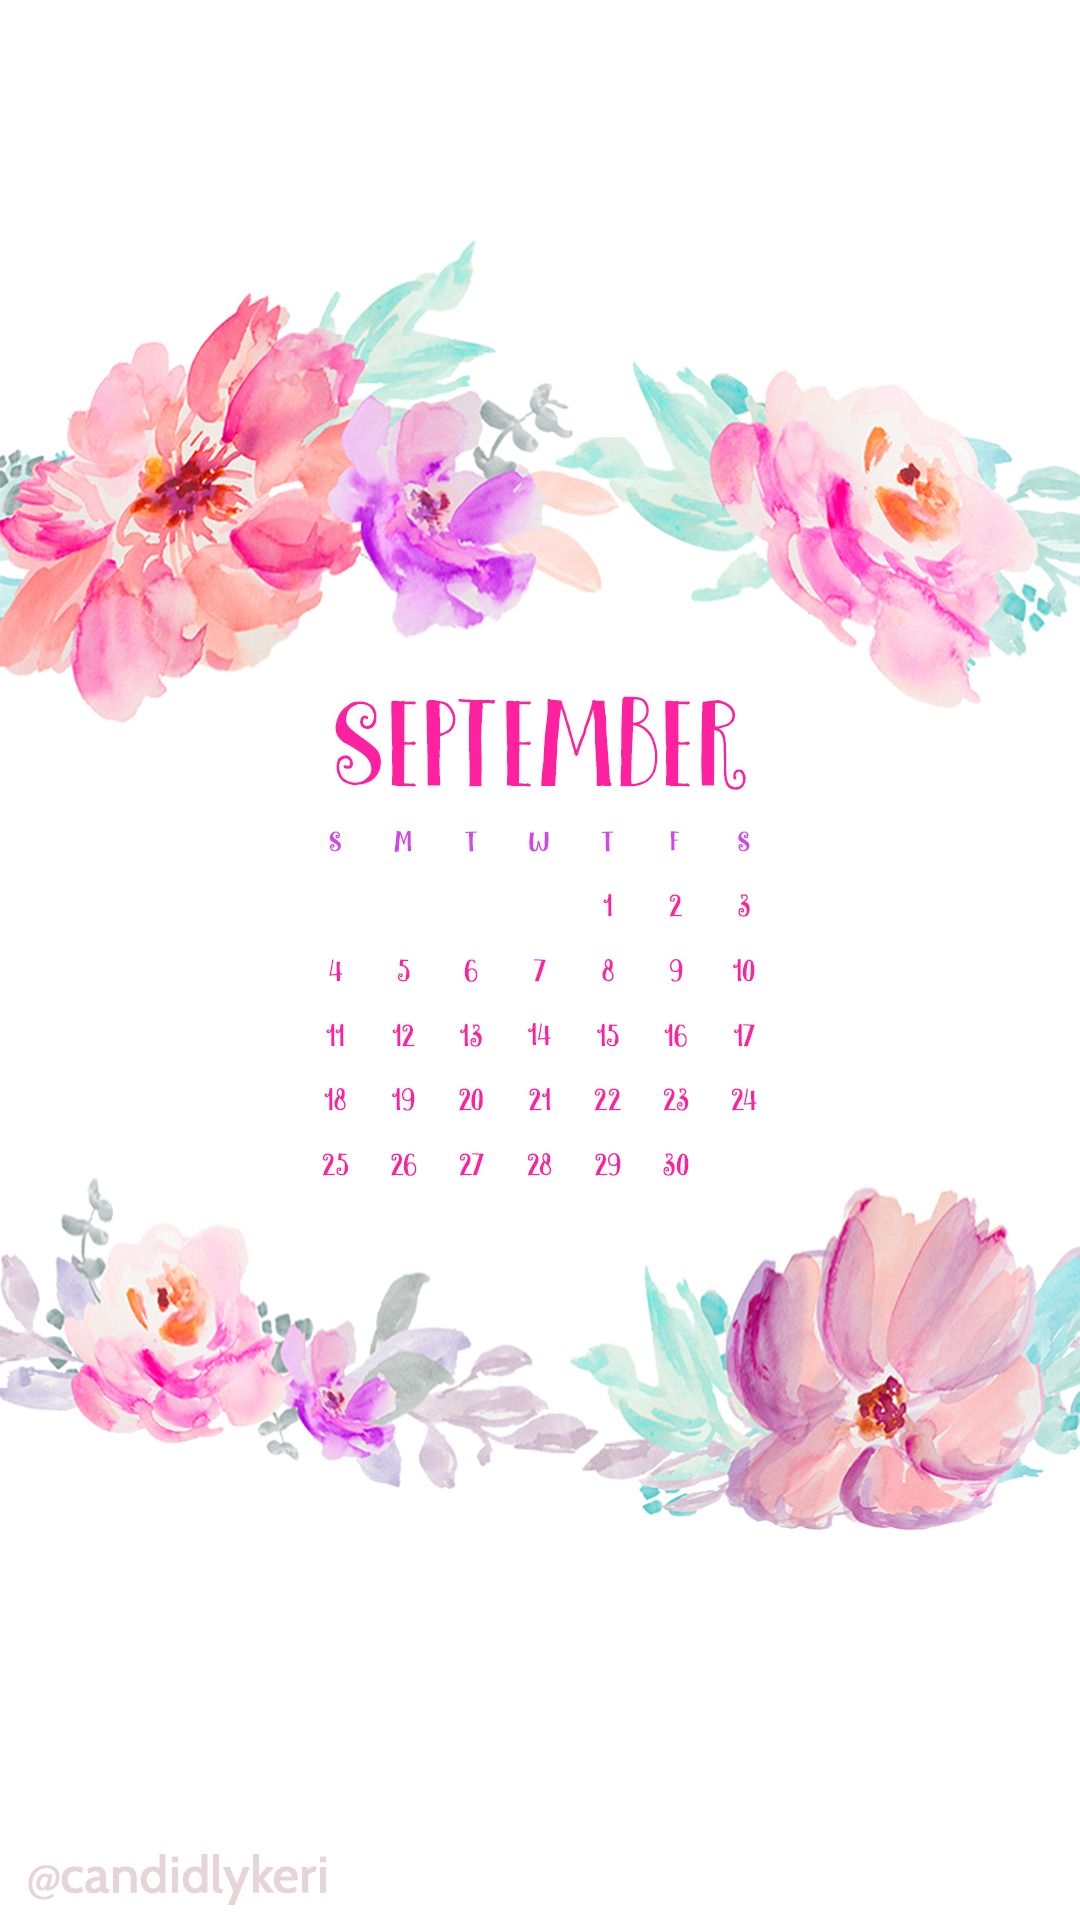 Flower Crown Watercolor September Calendar 2016 Wallpaper You Can